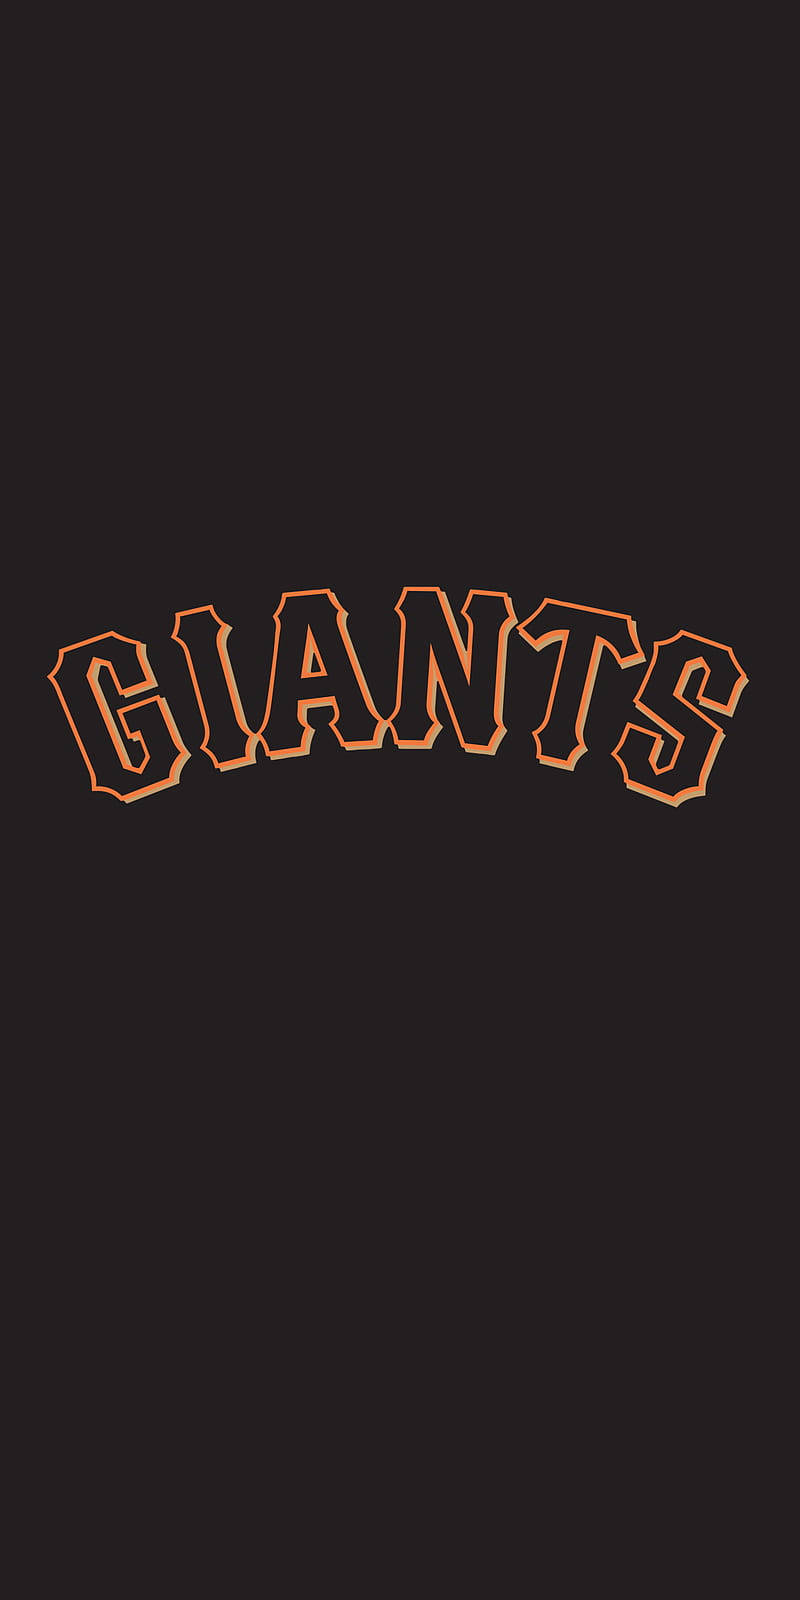 A Mesmerizing Snapshot Of A Sf Giants Baseball Game Captured Via Iphone. Wallpaper